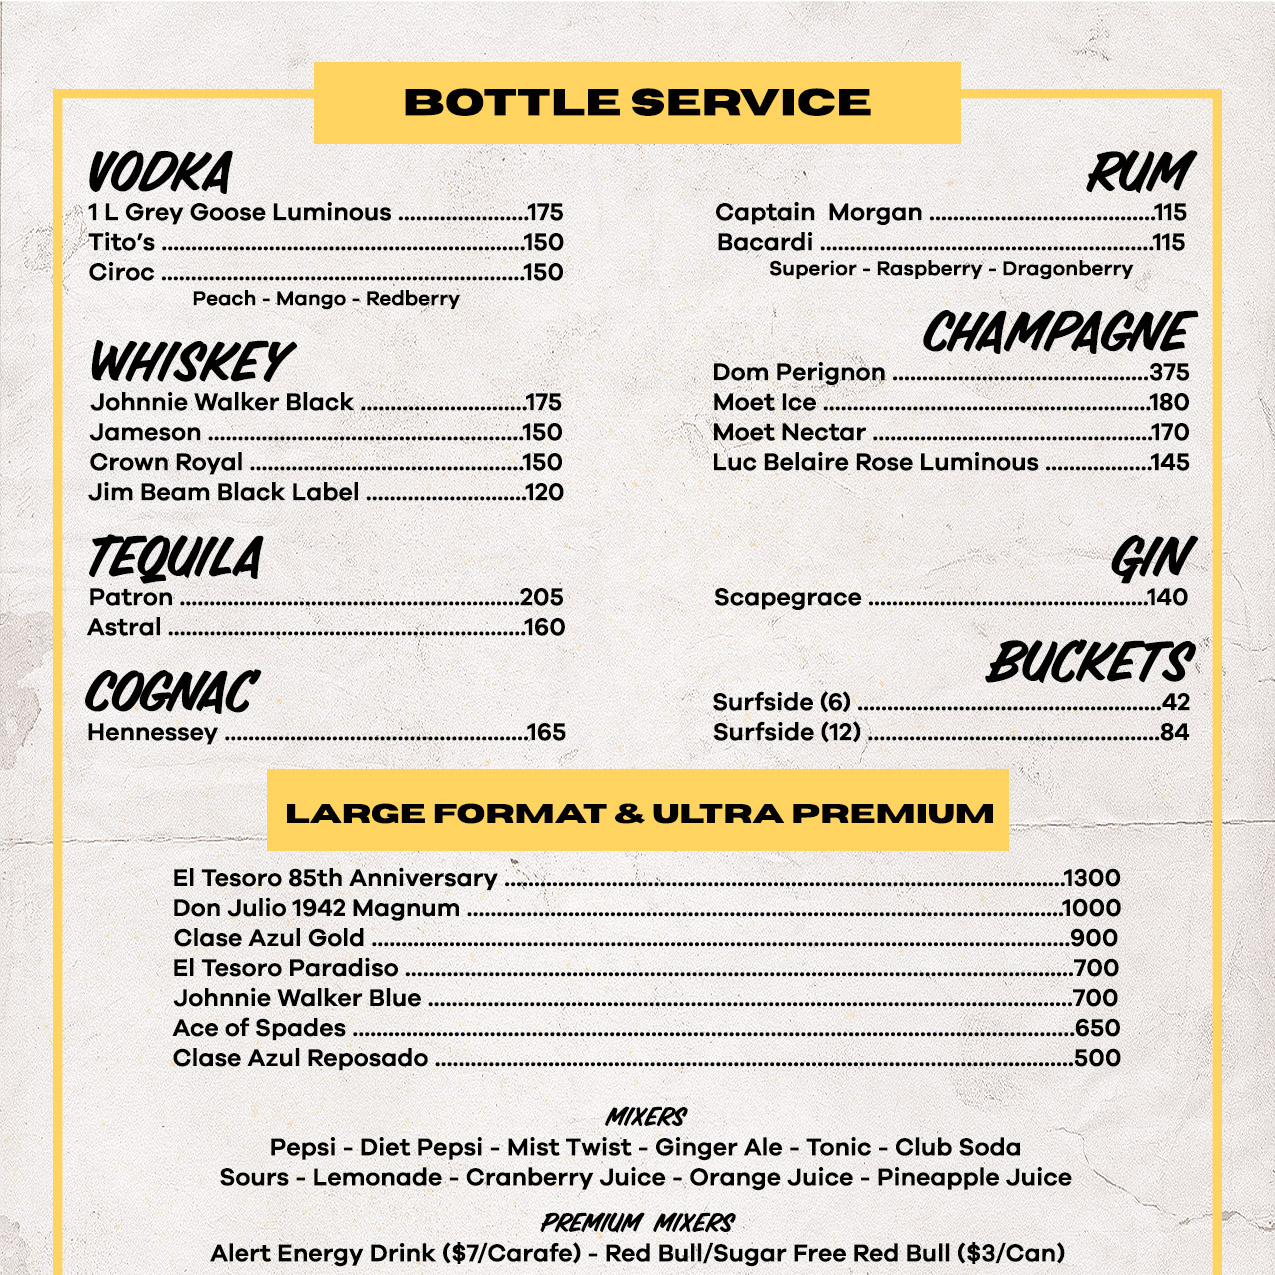 Bottle Service Table Fri Apr 26th image